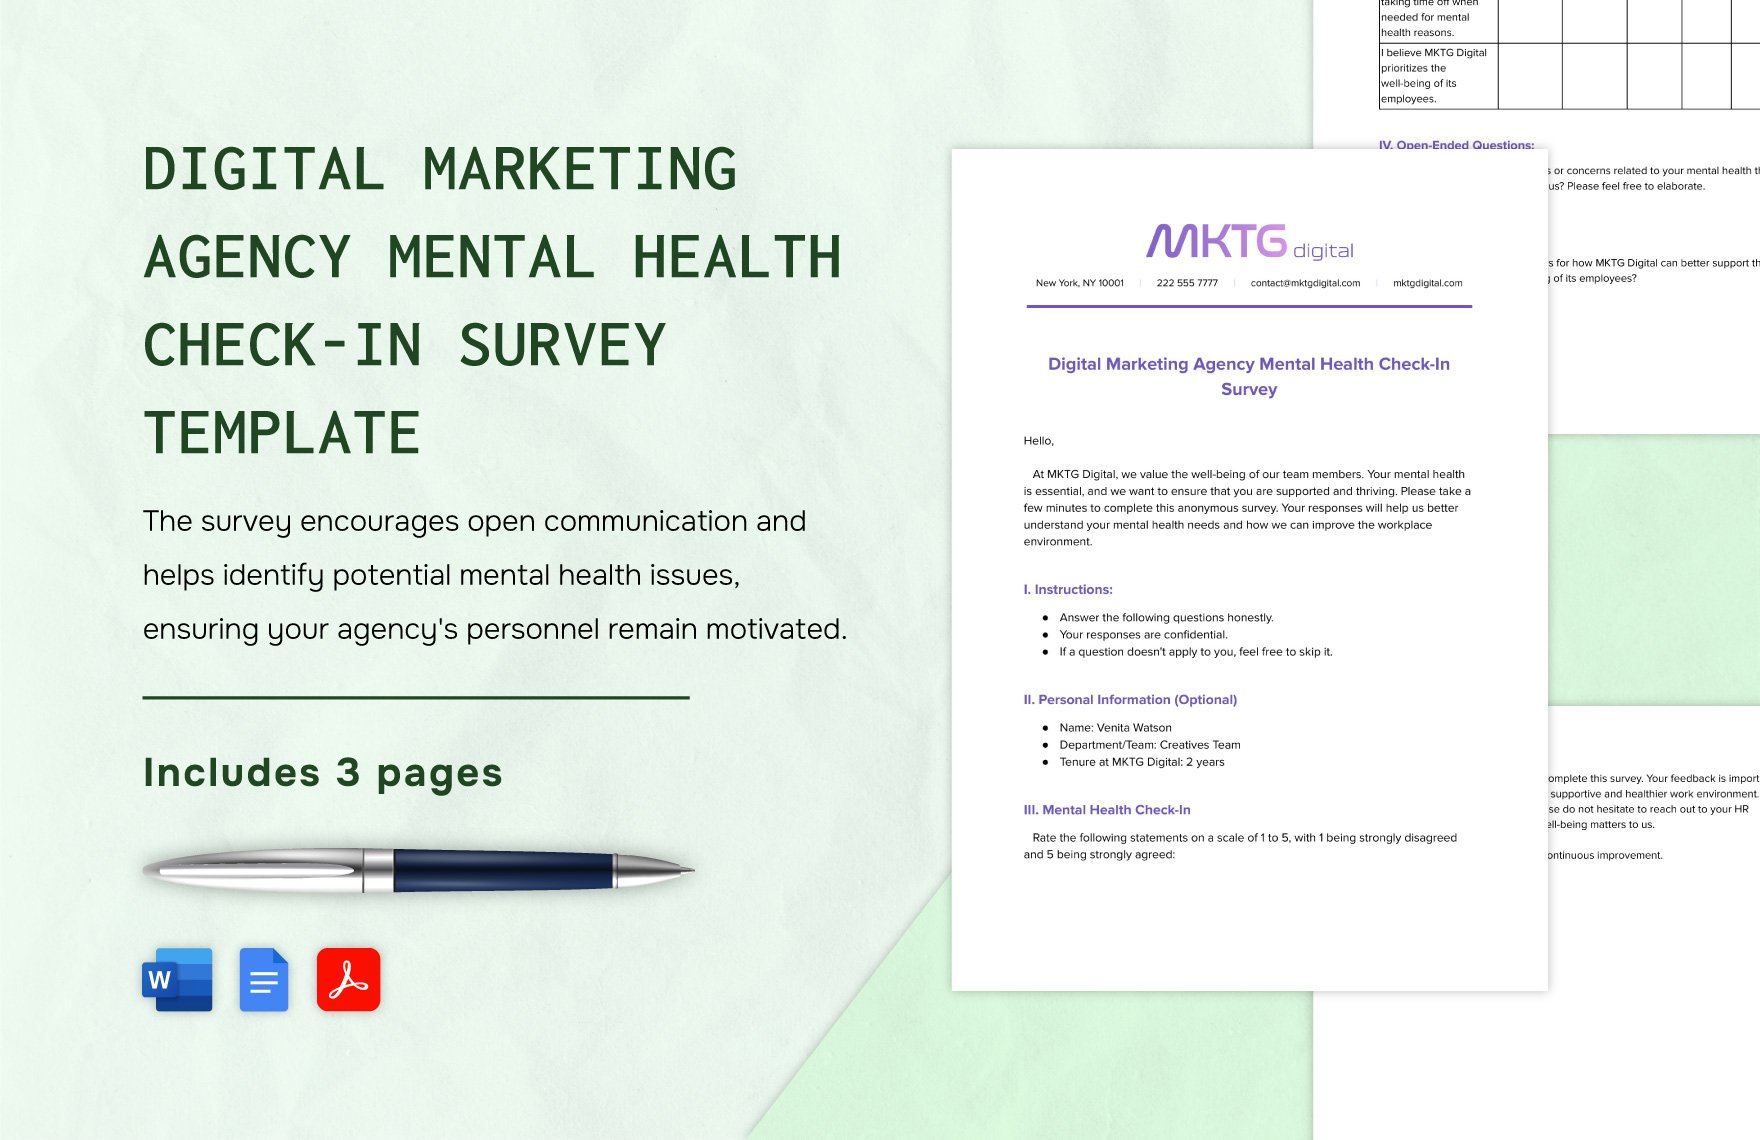 Digital Marketing Agency Mental Health Check-In Survey Template